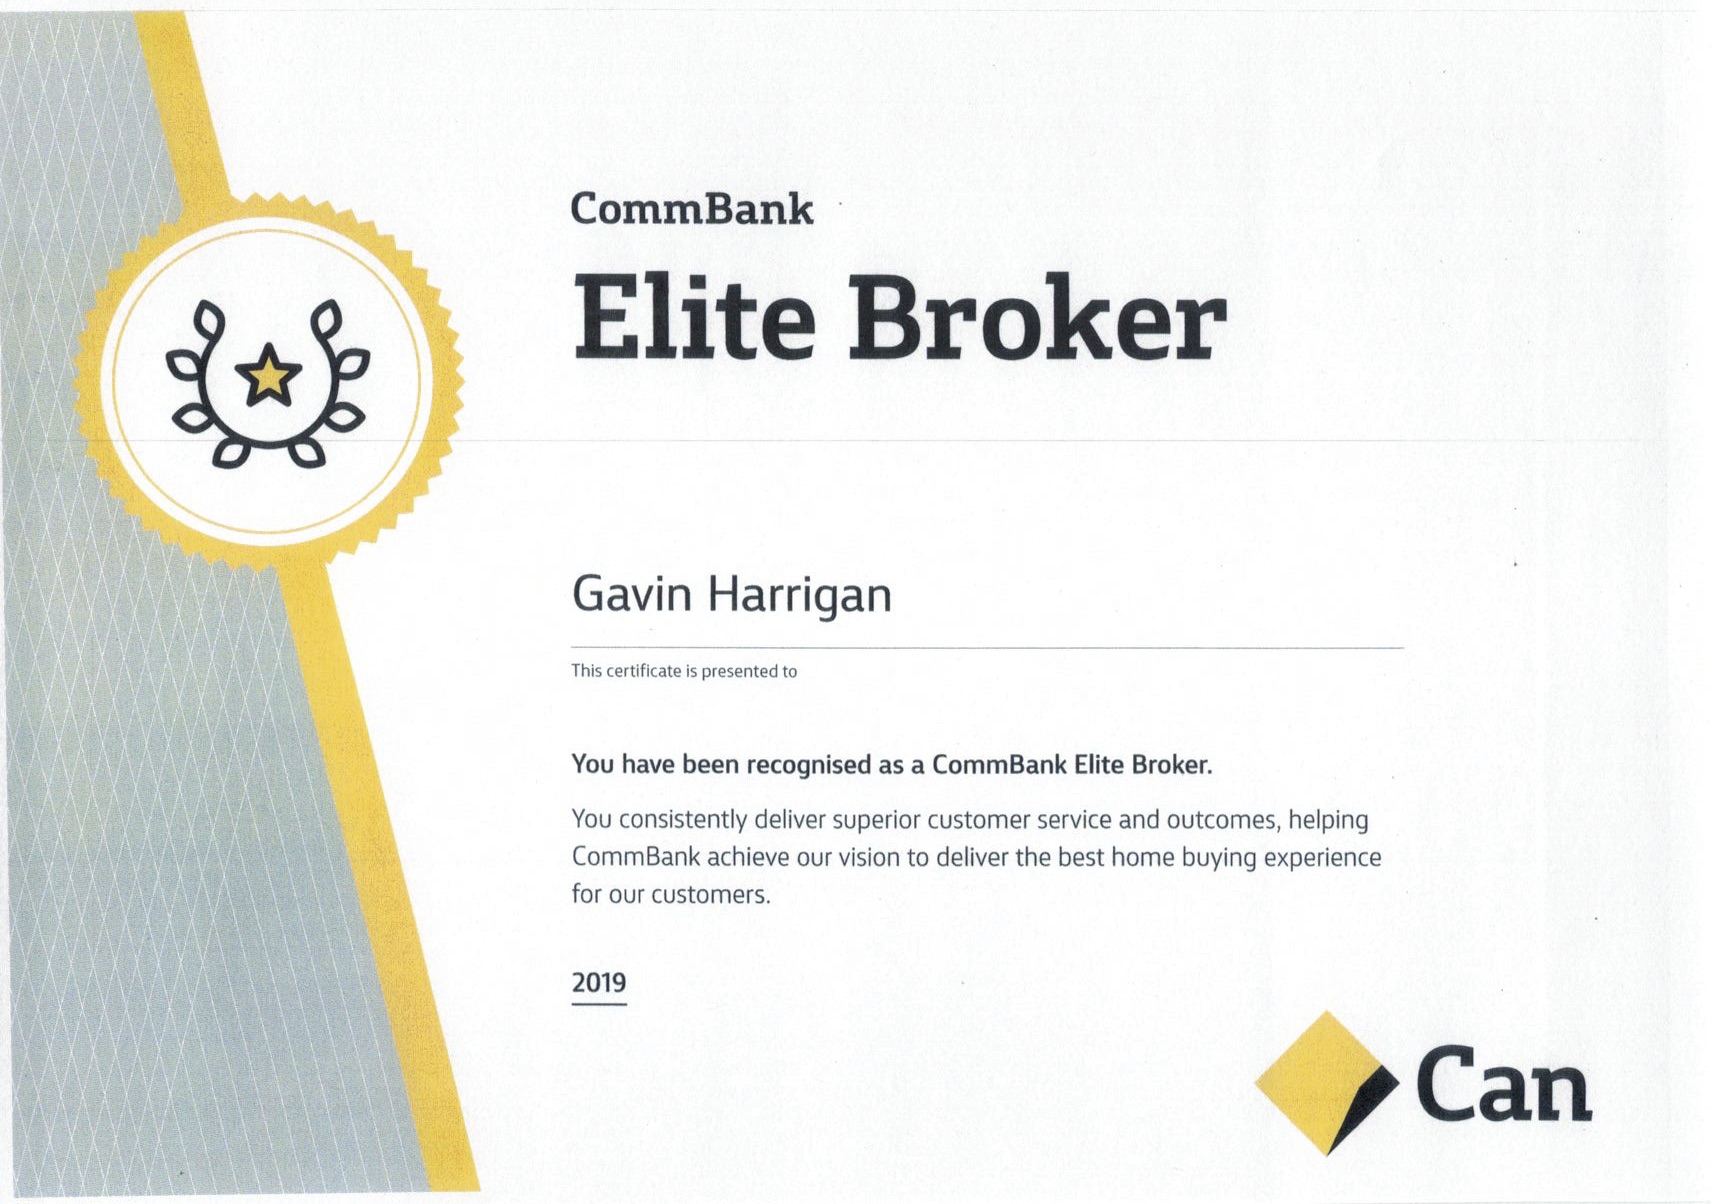 The Commbank Elite broker award given to Gavin Harrigan